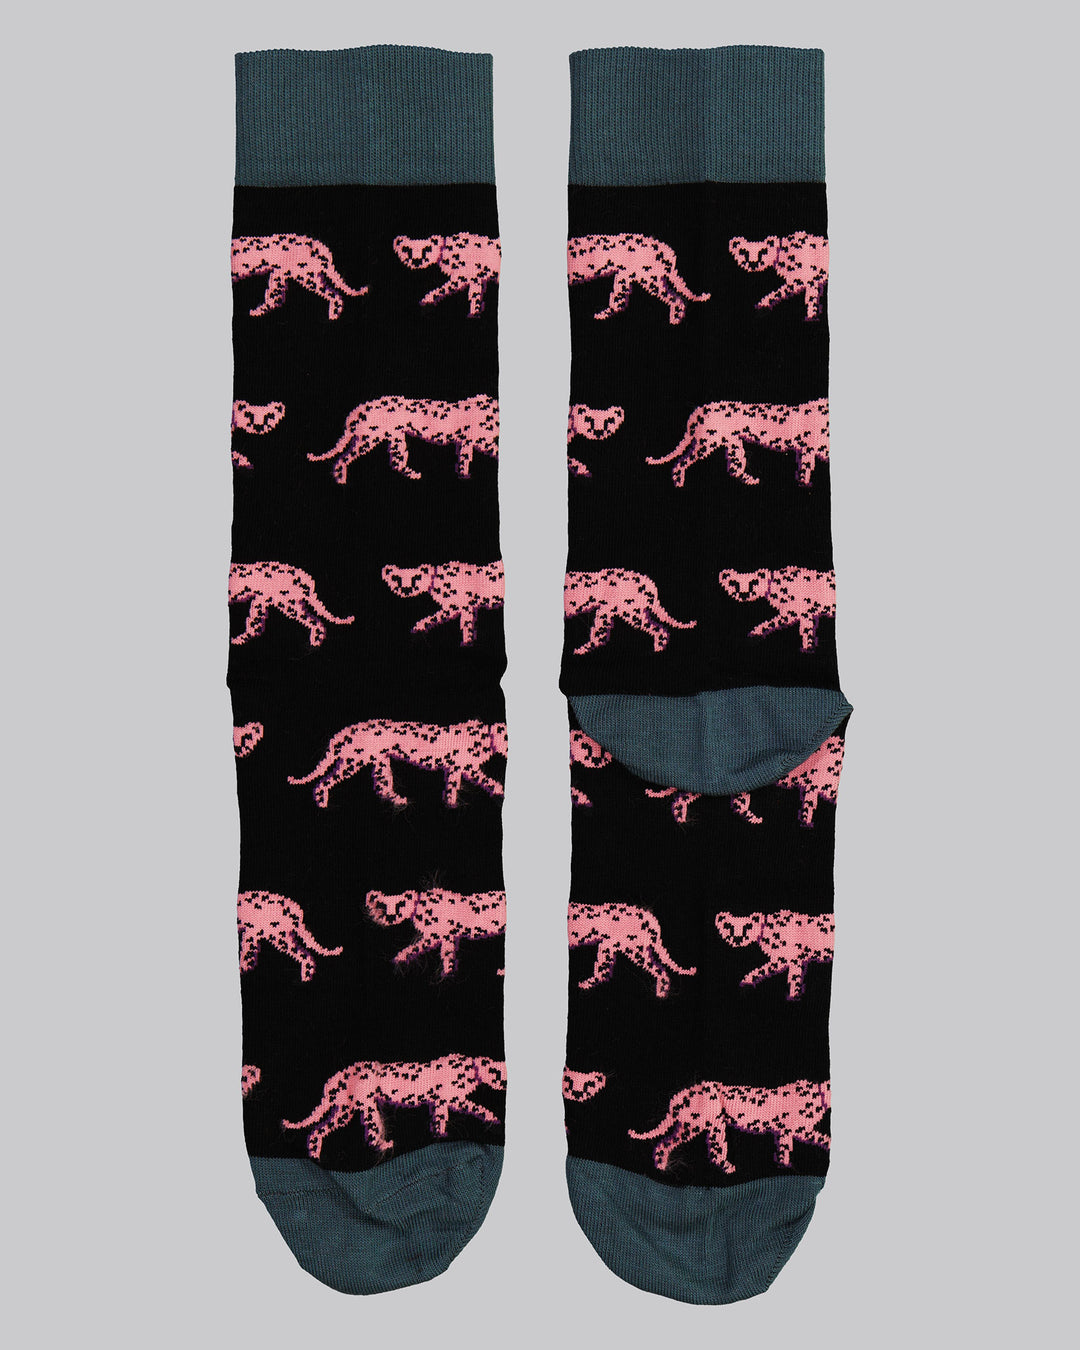 Socks Pink Cheetahs Charcoal Flat - Woodstock Laundry